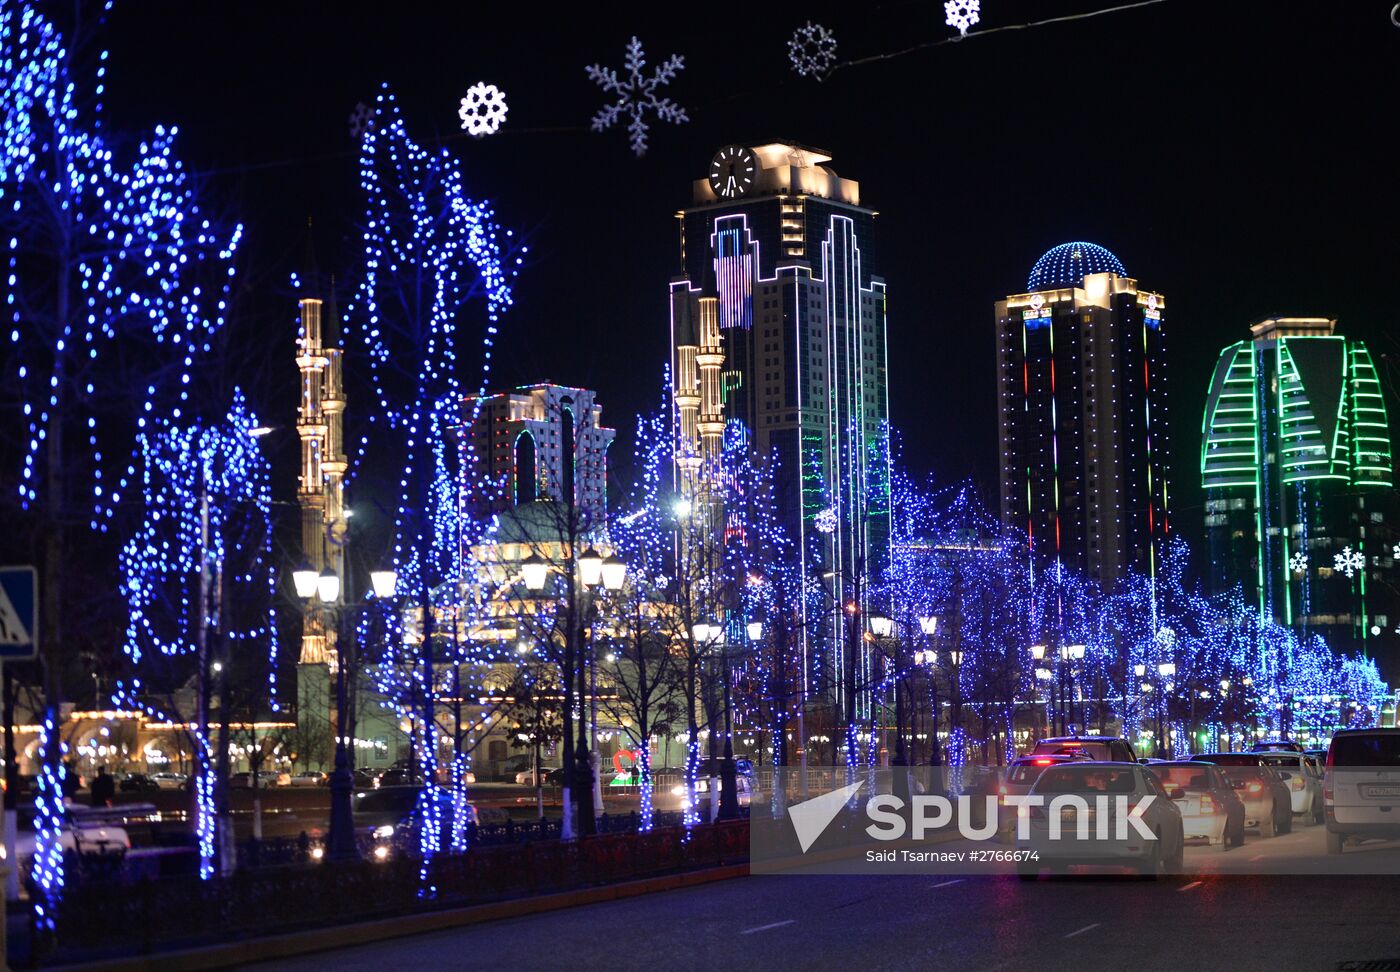 New Year's lighting in Grozny